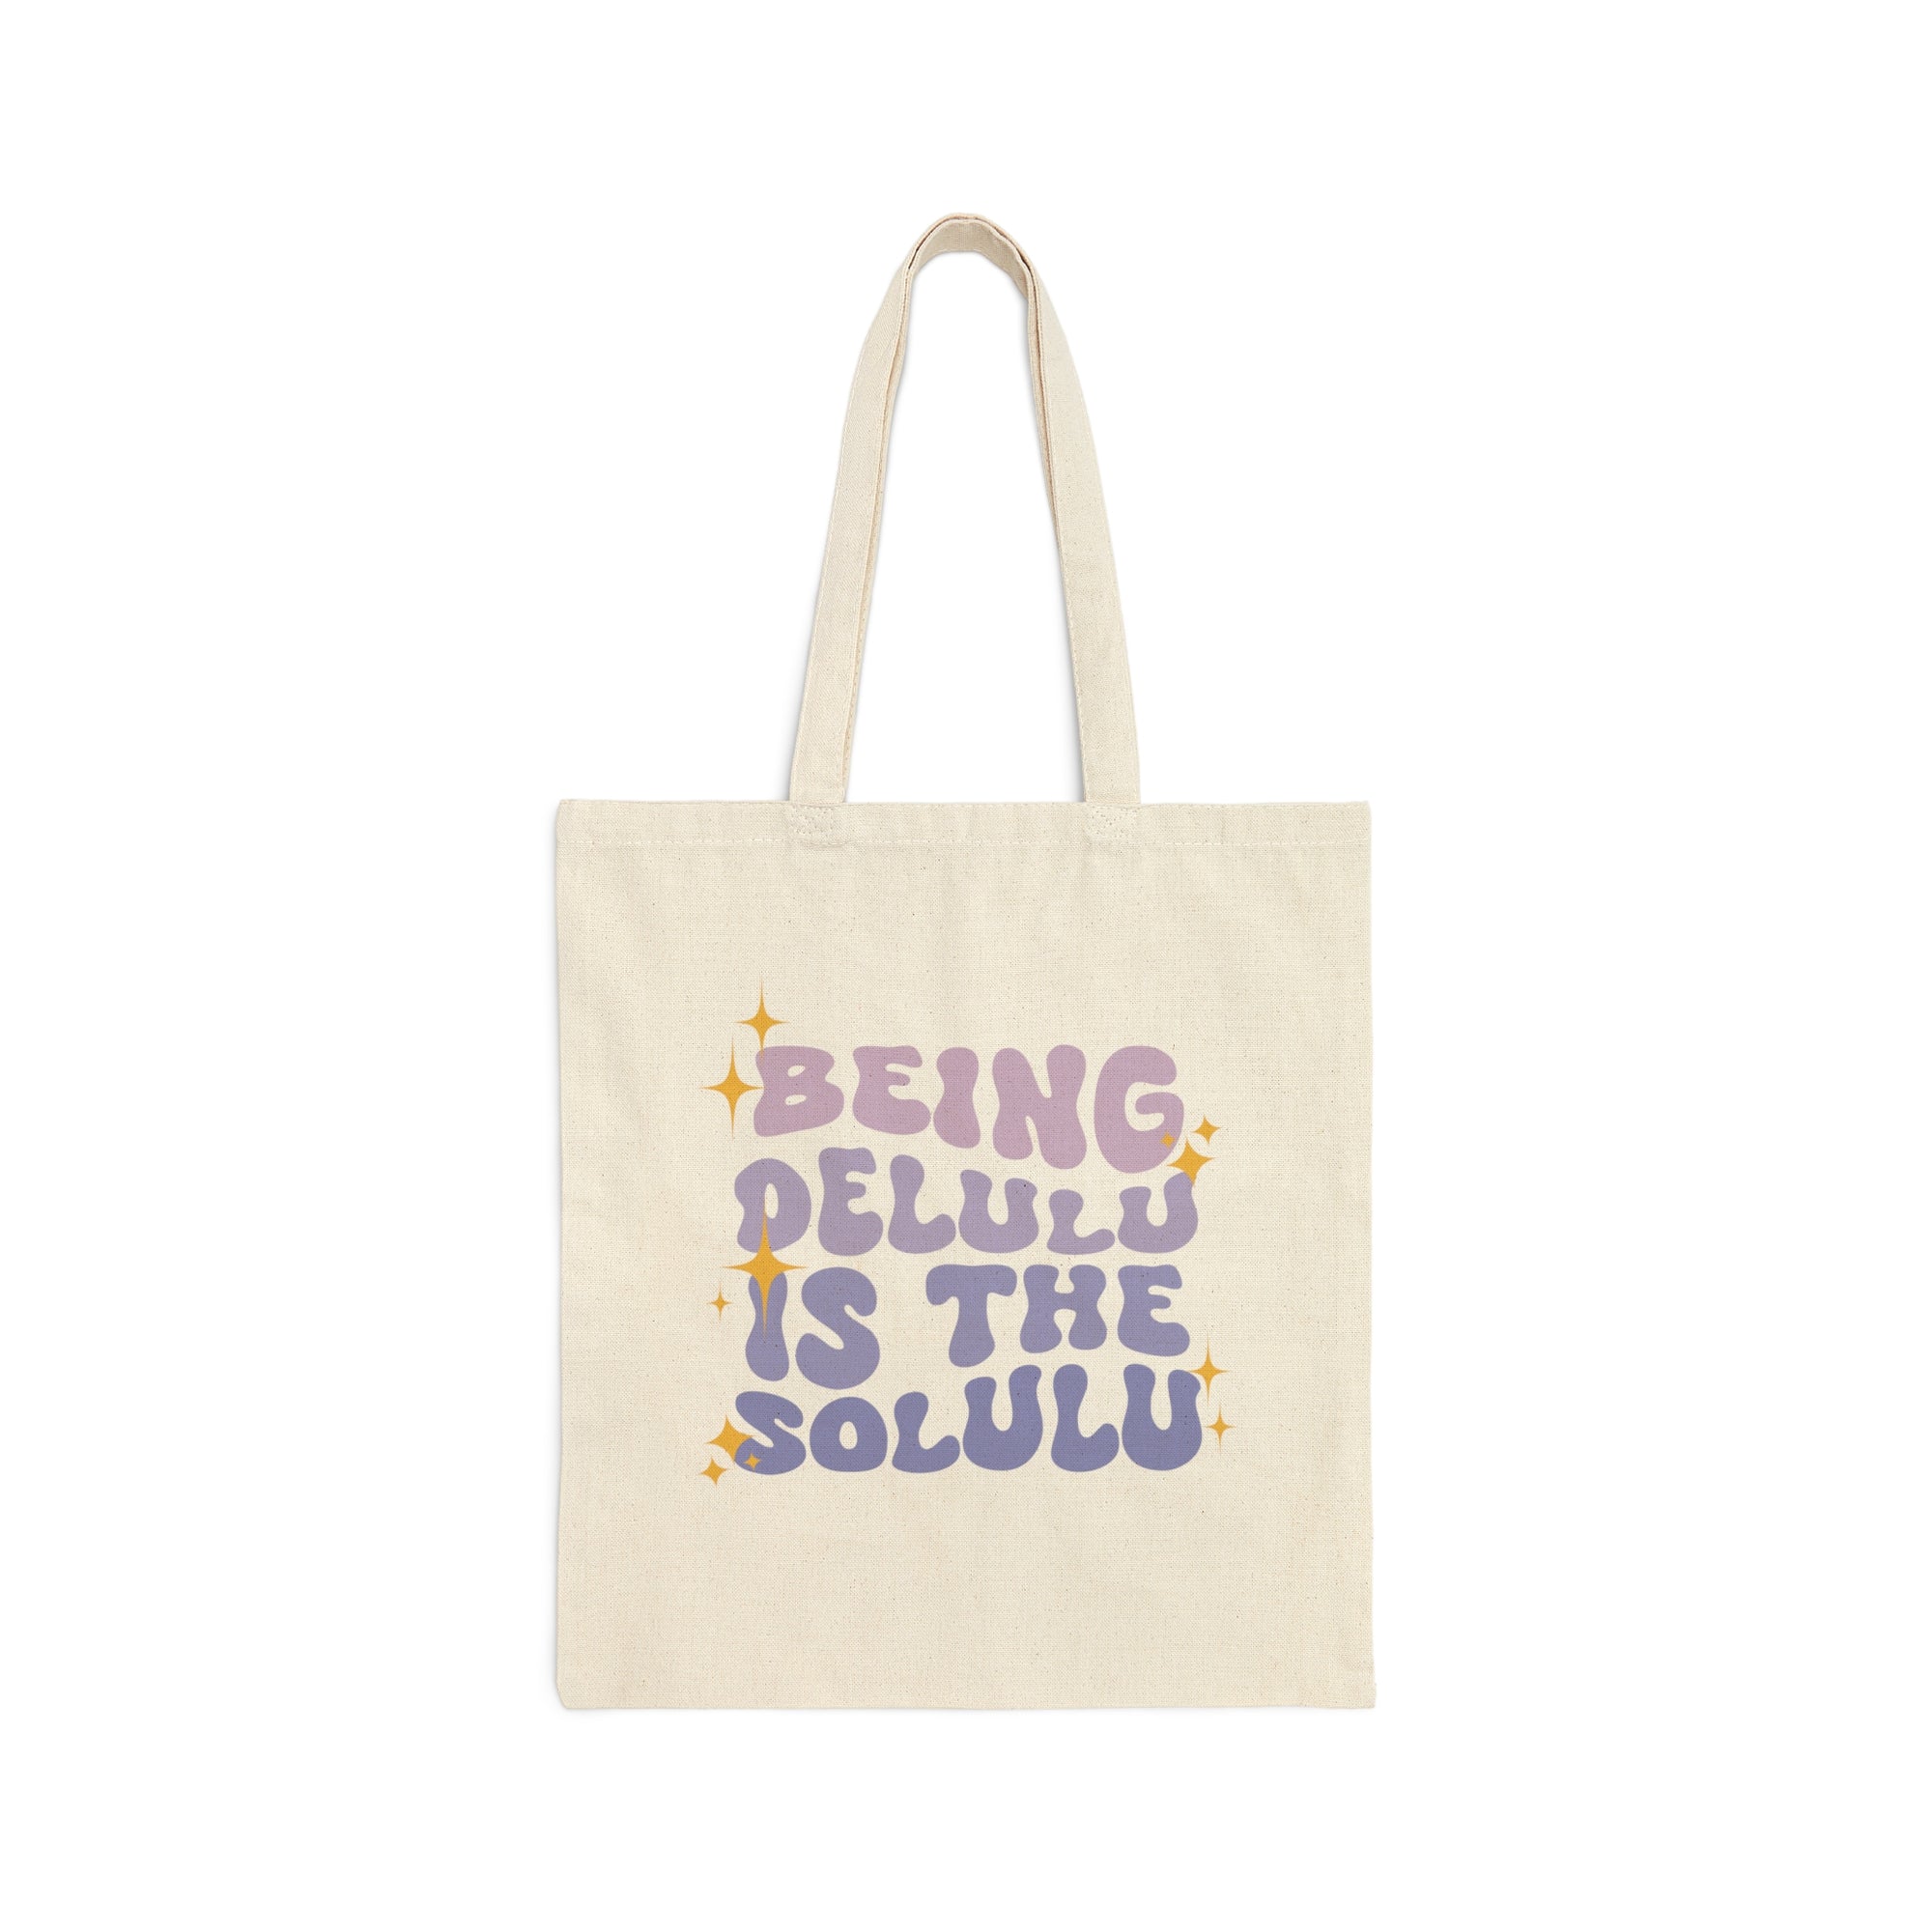 Delulu Is The Solulu Tote Bag, Mental Health Gift,  Tiktok Meme, Funny Gift for Best Friend, Pop Culture Gift Ideas, Cute Delulu Bag